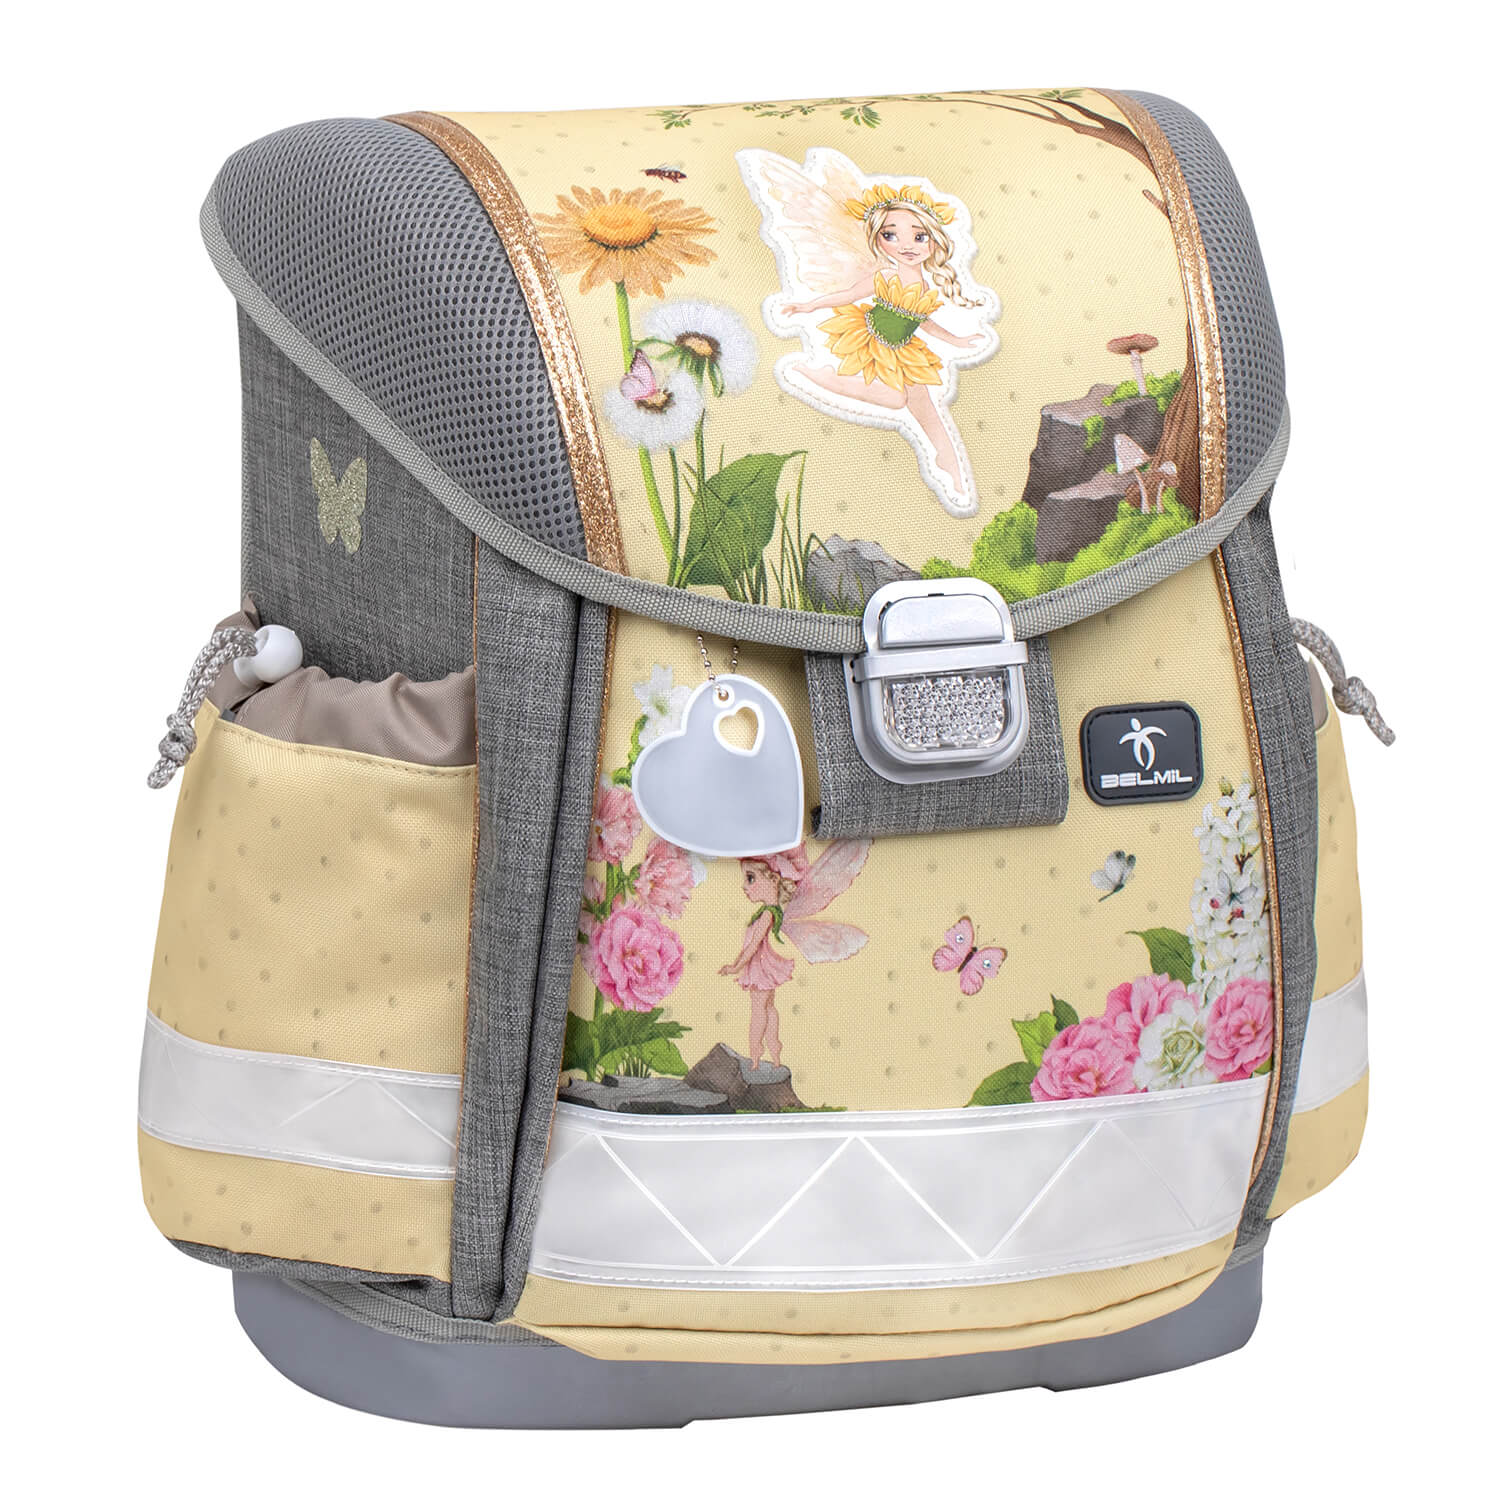 Classy Fairy Garden schoolbag set 4 pcs